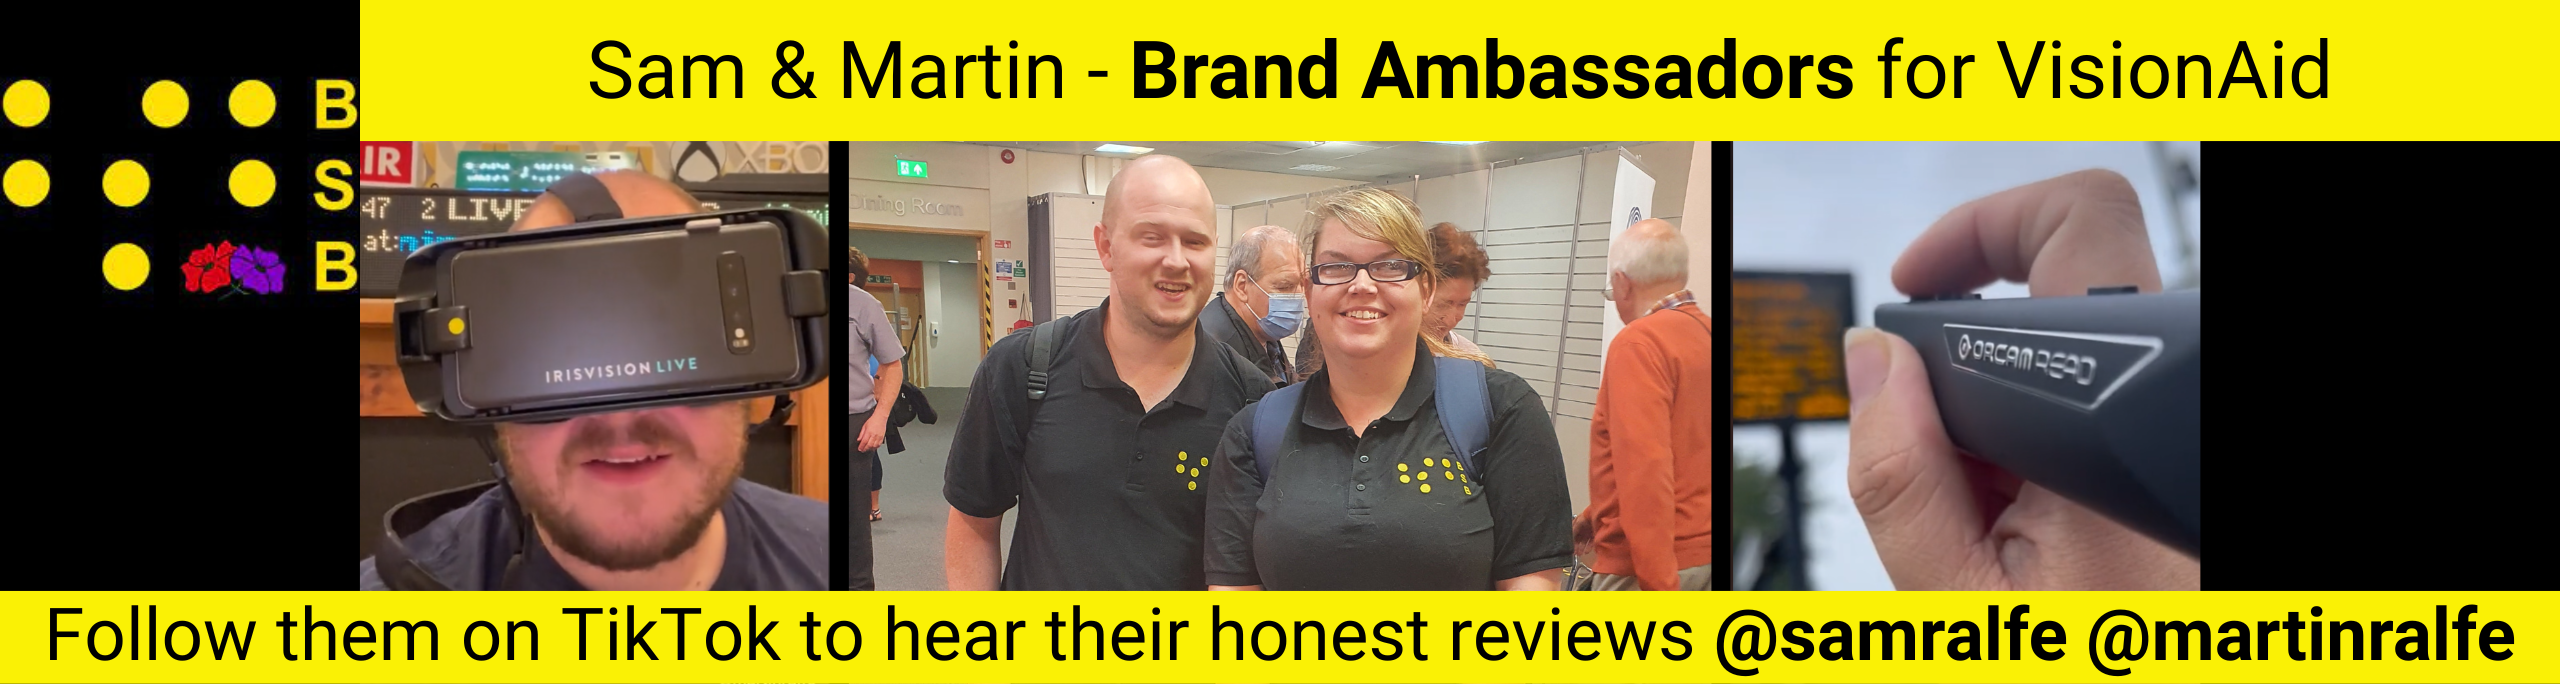 Sam & Martin - Brand Ambassadors for VisionAid. Follow them on TikTok to hear their honest reviews @samralfe @martinralfe